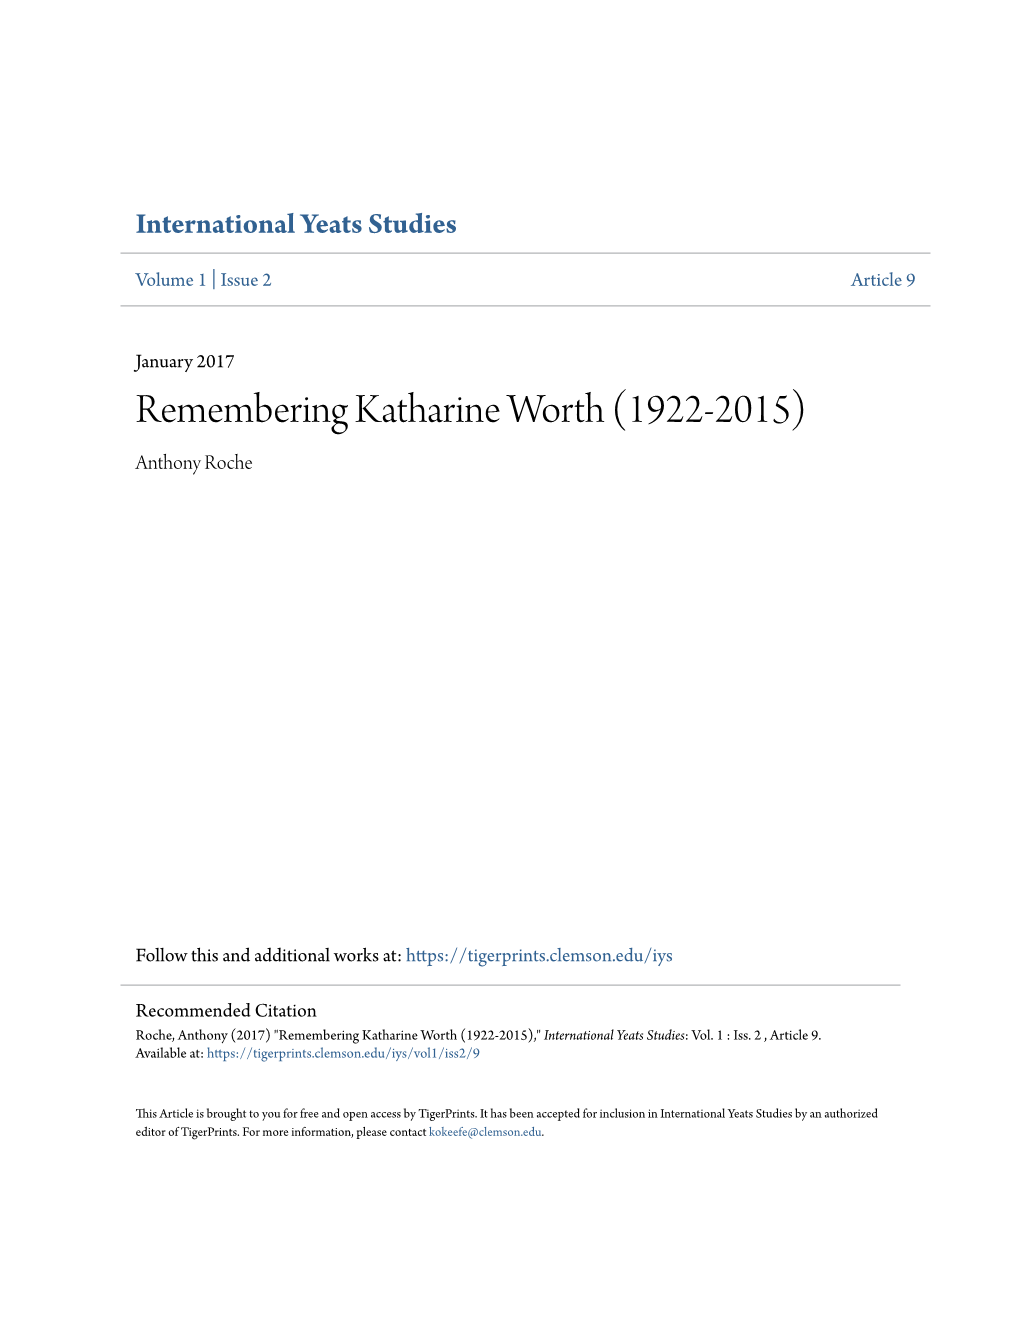 Remembering Katharine Worth (1922-2015) Anthony Roche